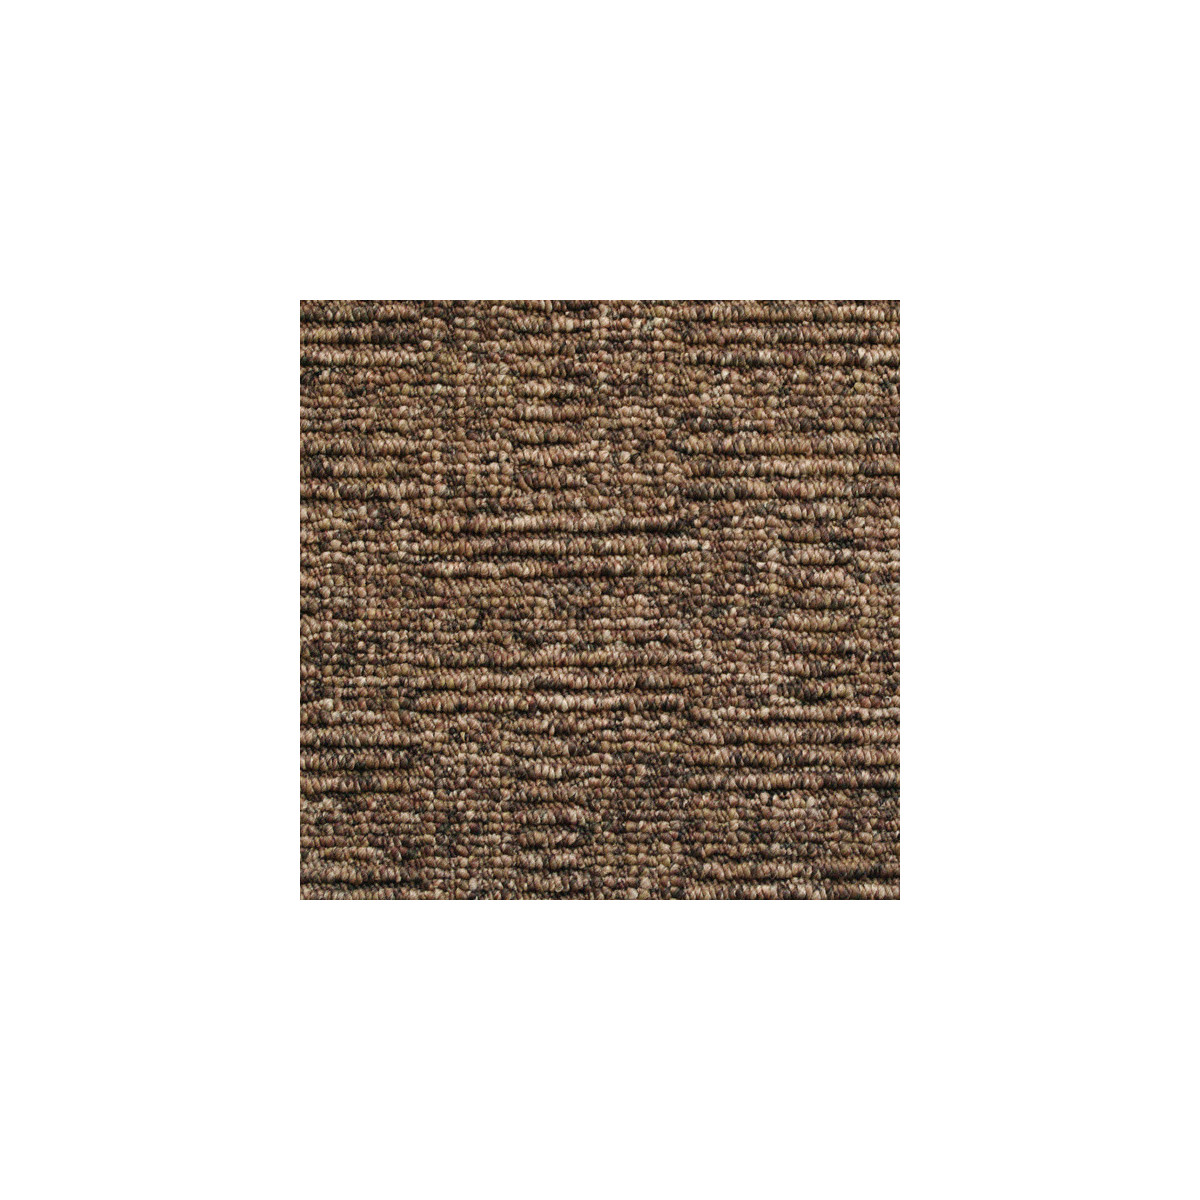 Metrážový koberec Loft 18 hnědý